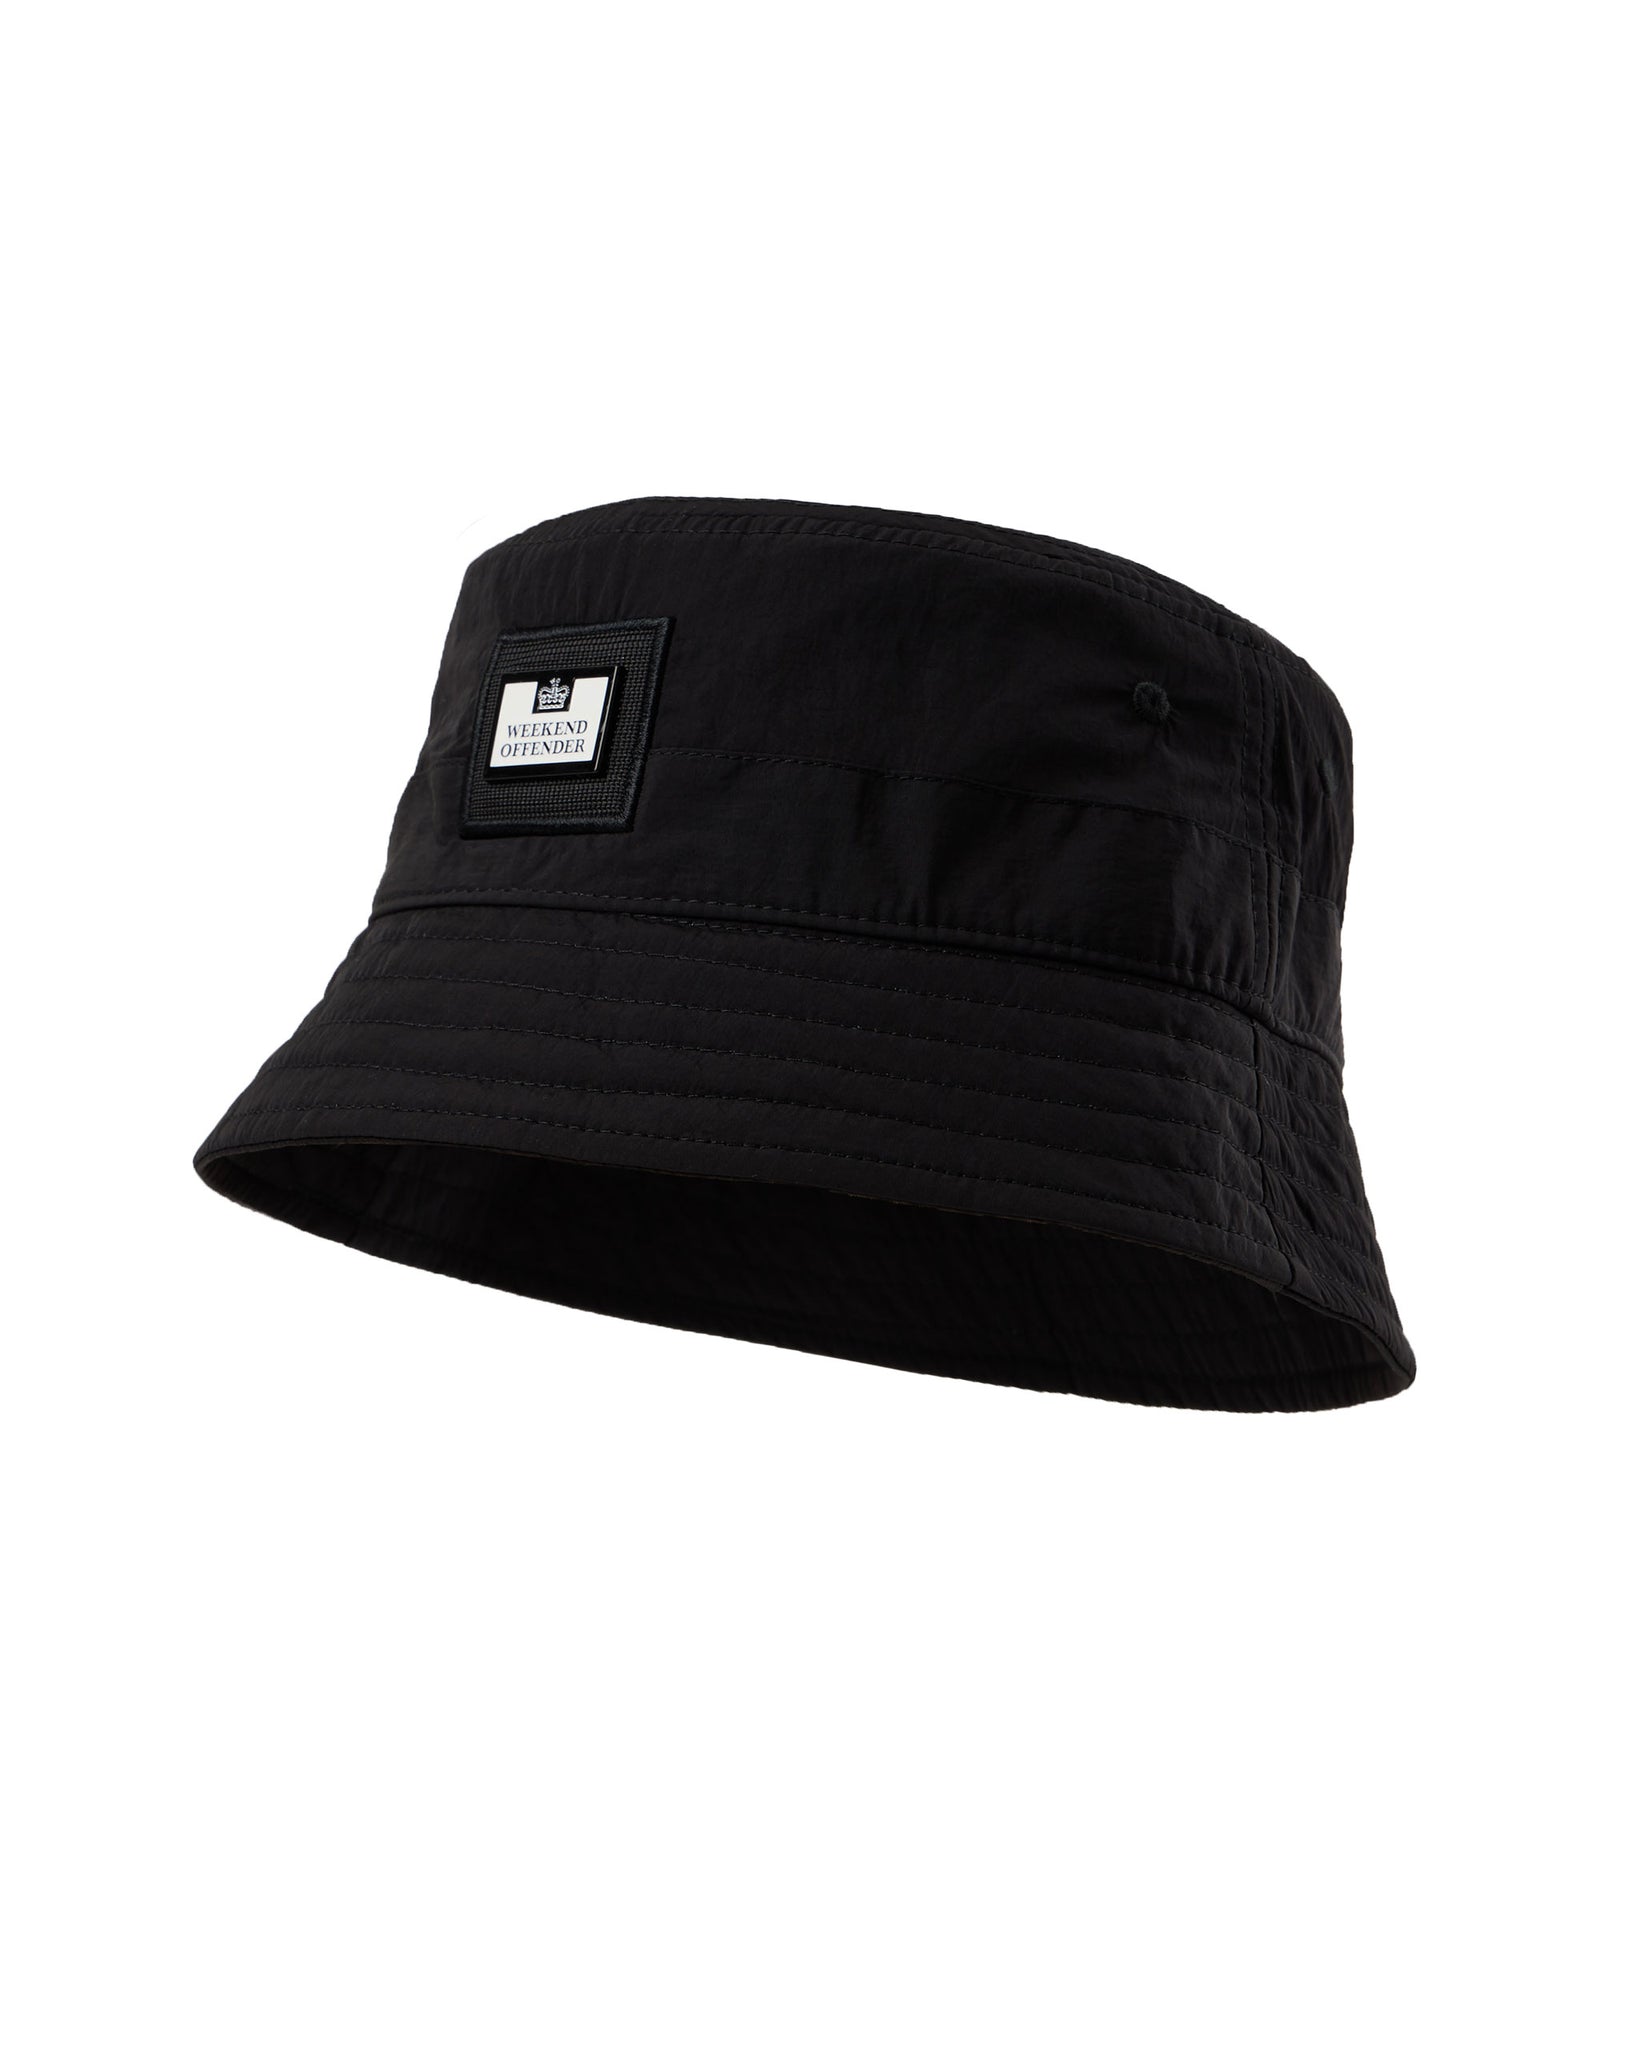 Long Beach Blvd Bucket Hat Black